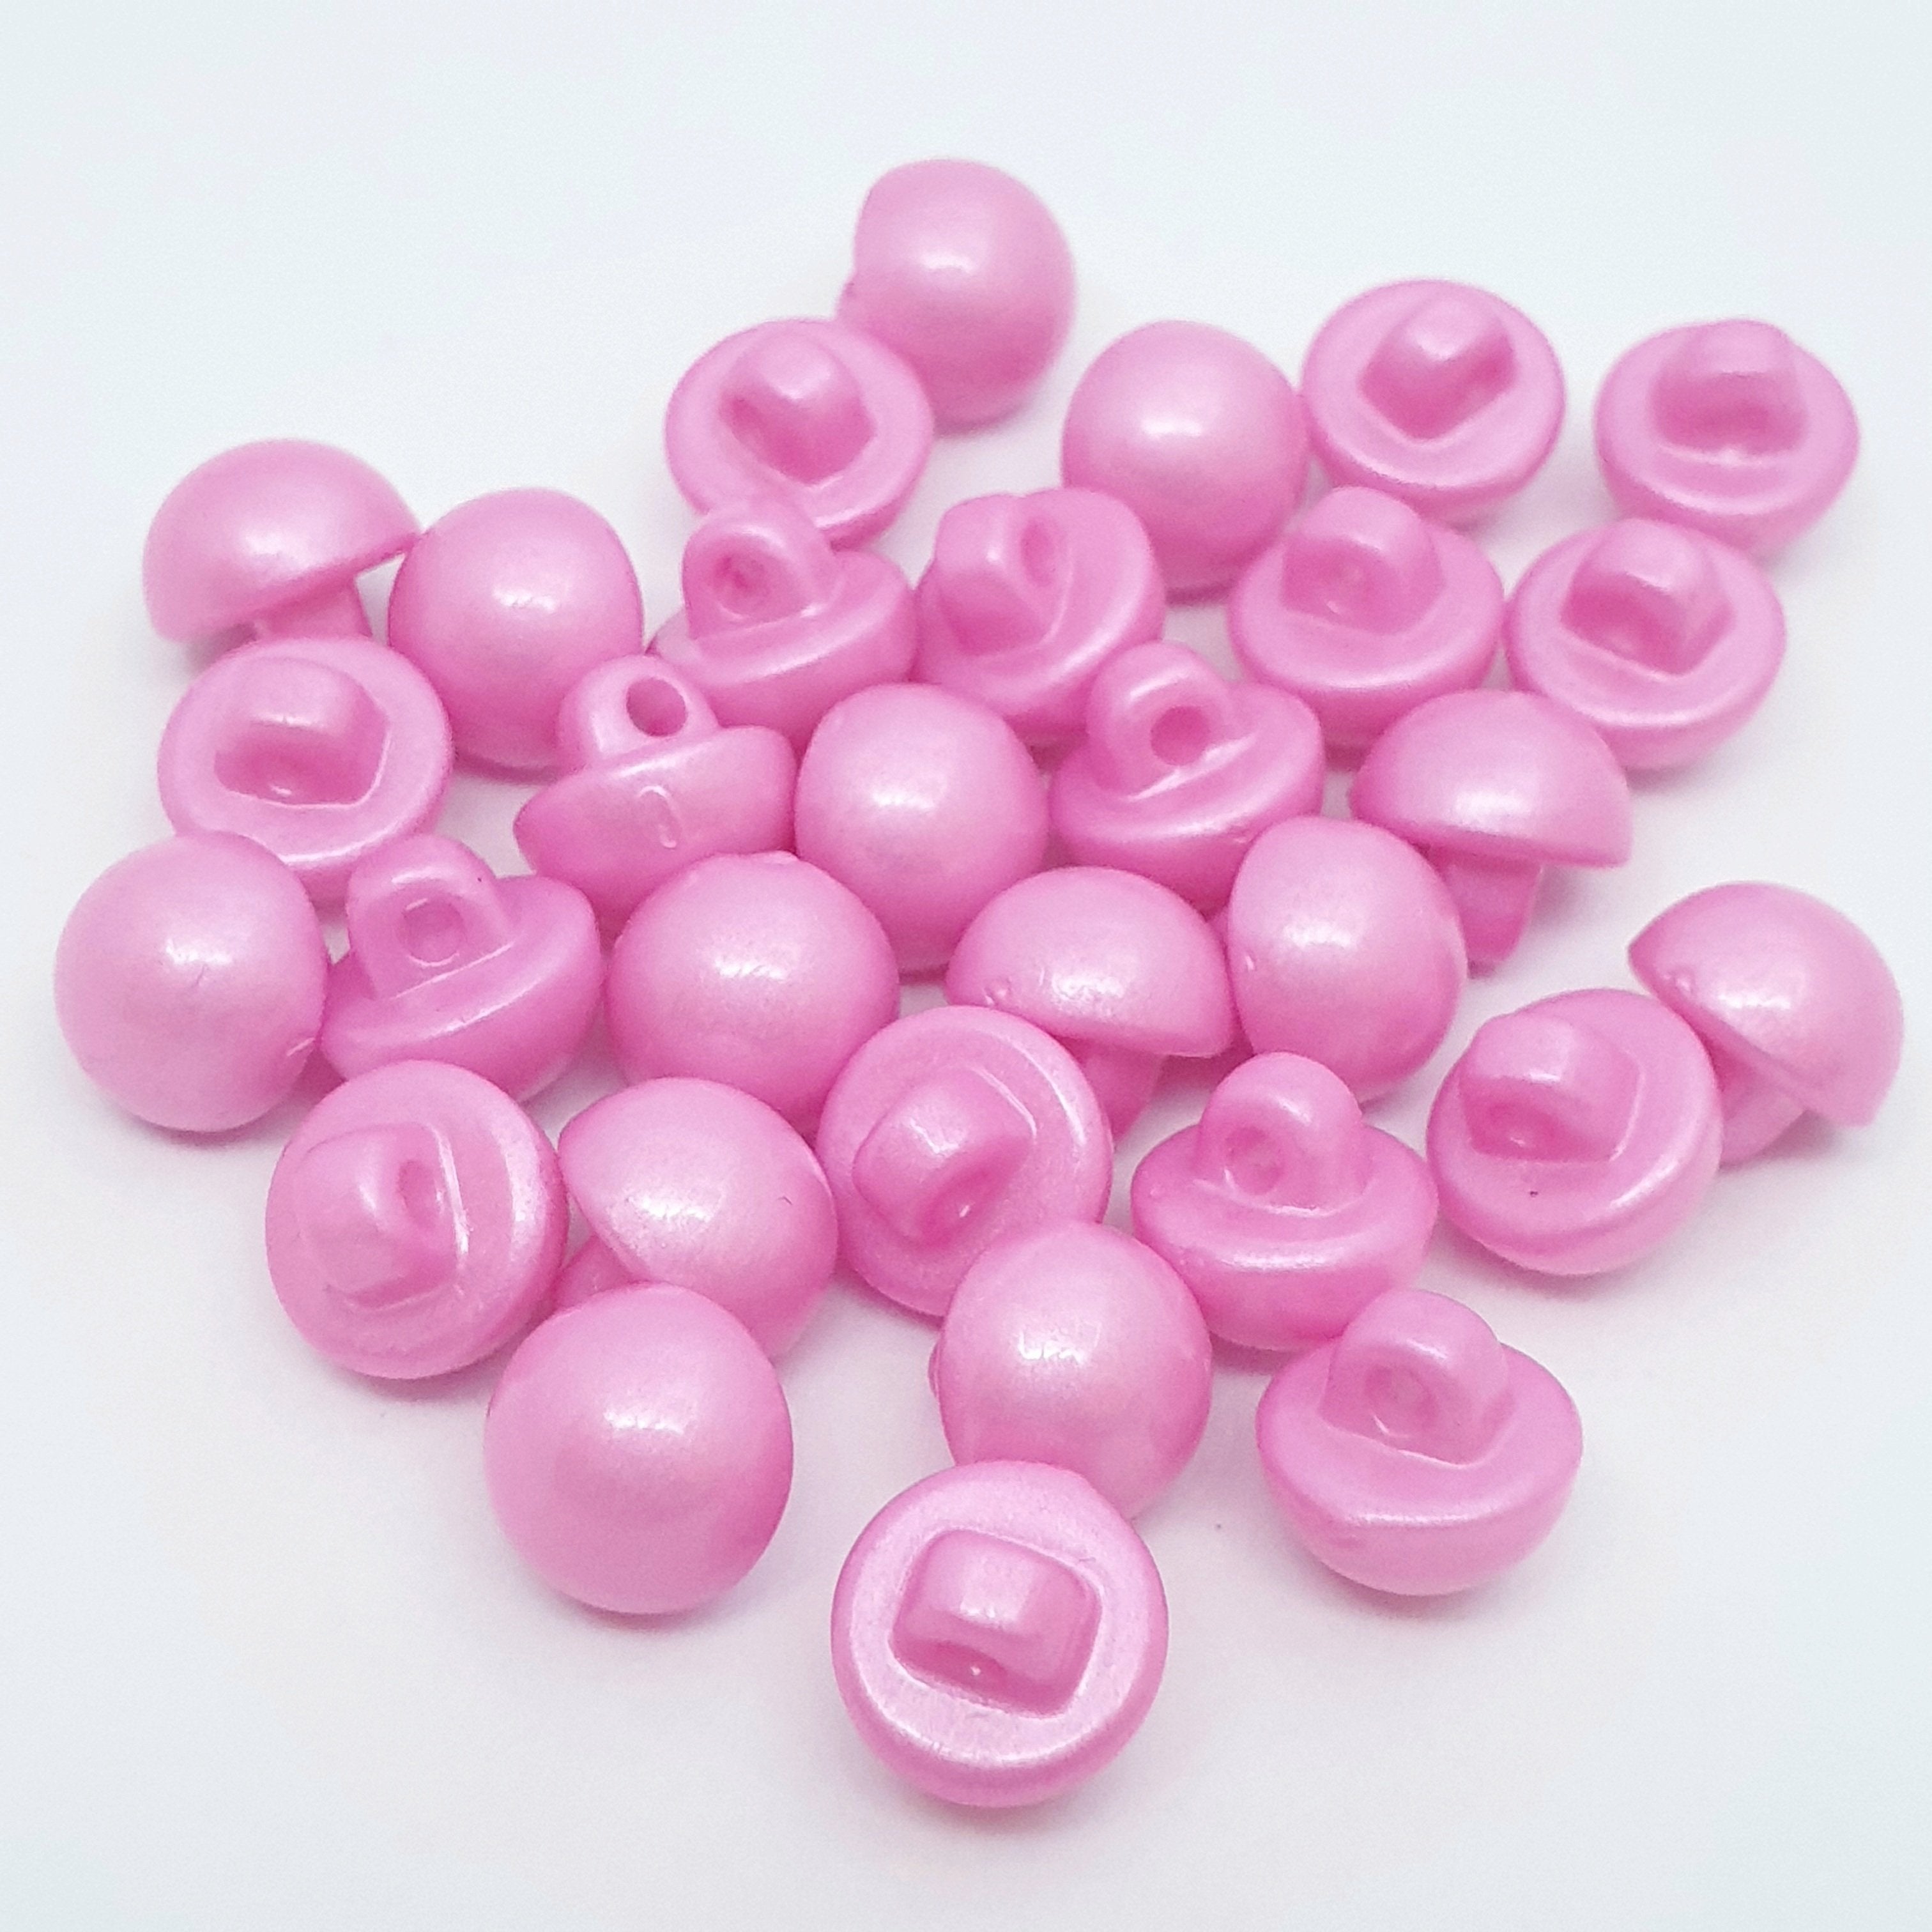 MajorCrafts 30pcs 10mm Light Rose Pink High-Grade Acrylic Small Round Sewing Mushroom Shank Buttons